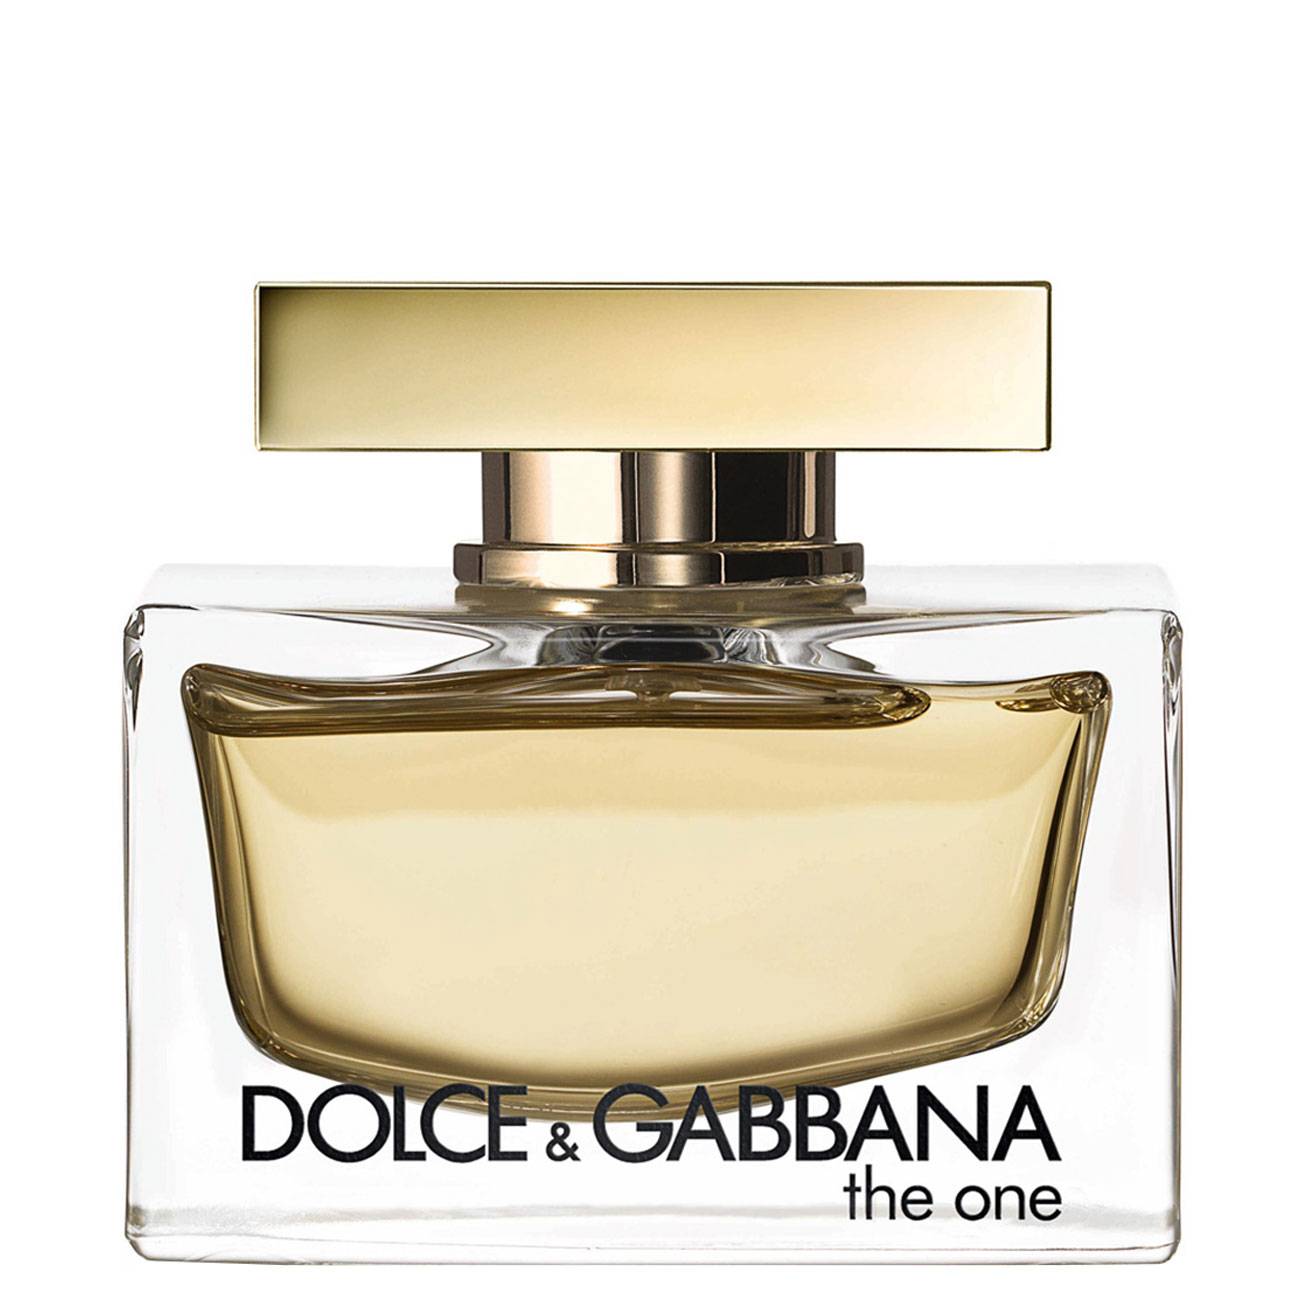 THE ONE 75ml original Dolce & Gabbana bestvalue